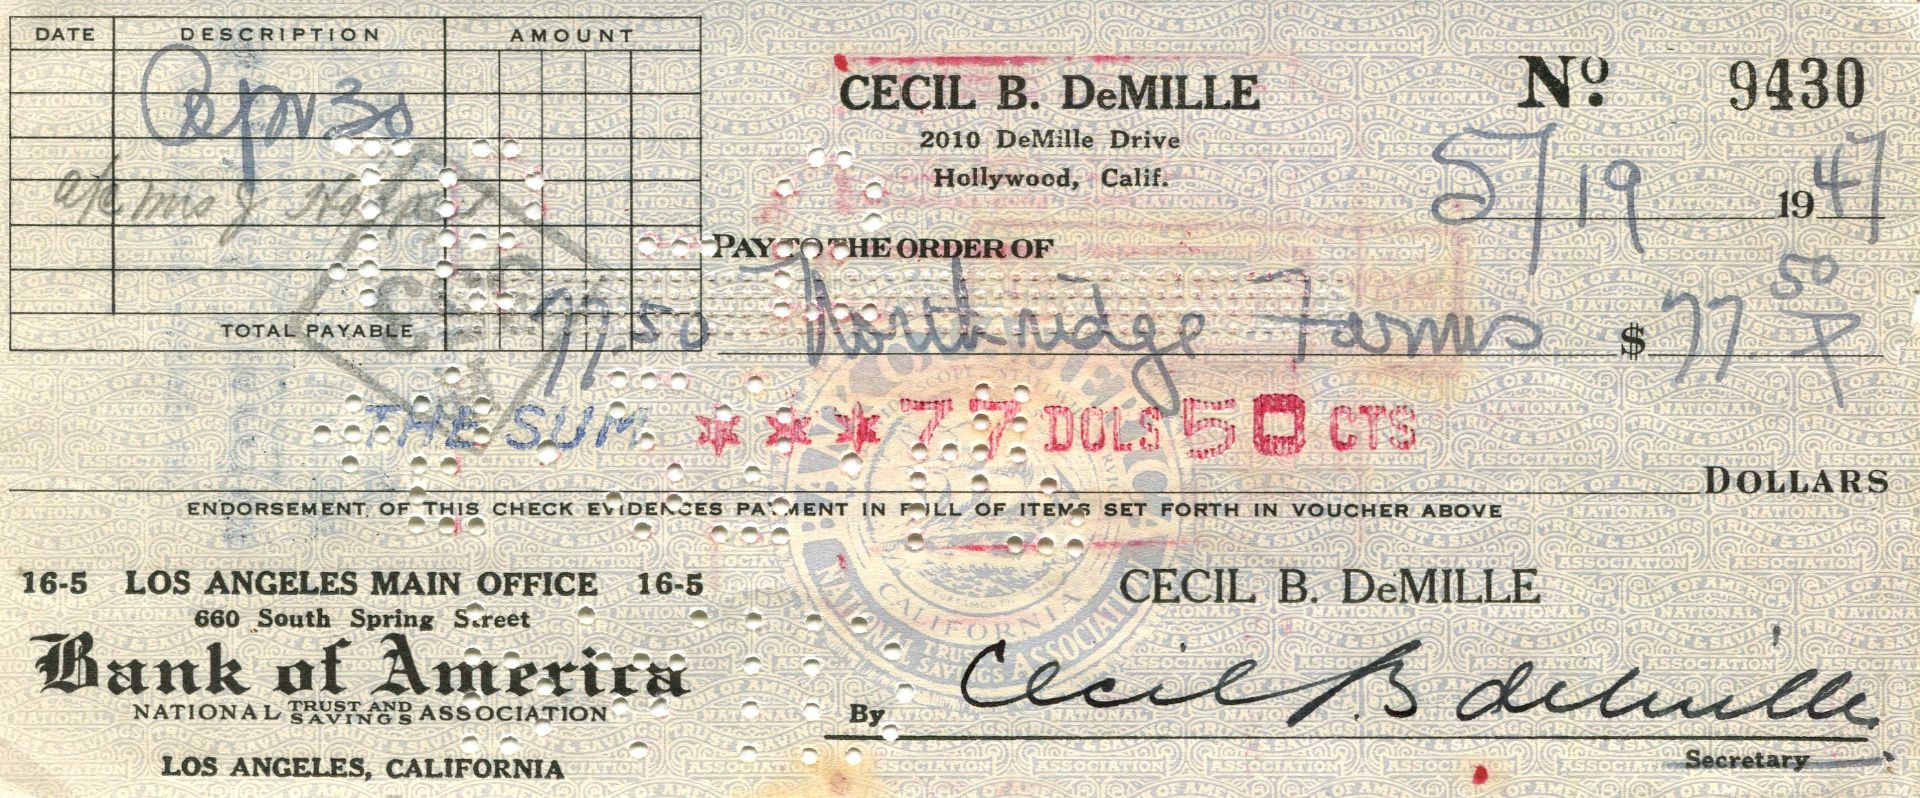 DEMILLE CECIL B.: (1881-1959) American film director, Academy Award winner. D.S.